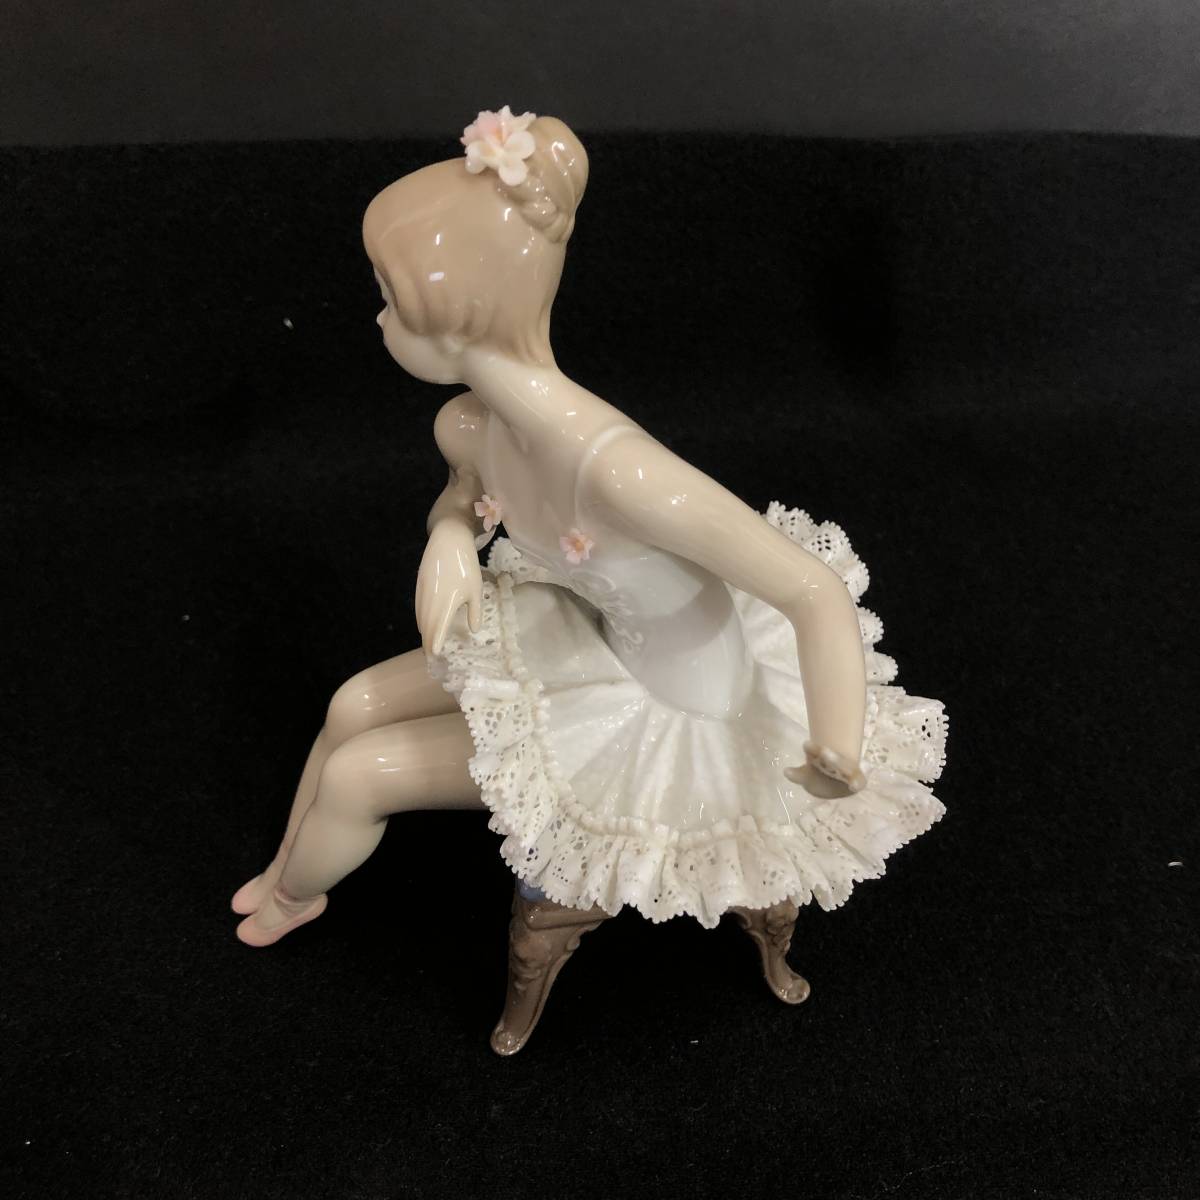 LLADRO リヤドロ フィギュリン No.5496 「出番前のおさらい」バレエ 女の子 少女 陶磁器人形 西洋陶磁 陶芸 西洋工芸 工芸品 置物 